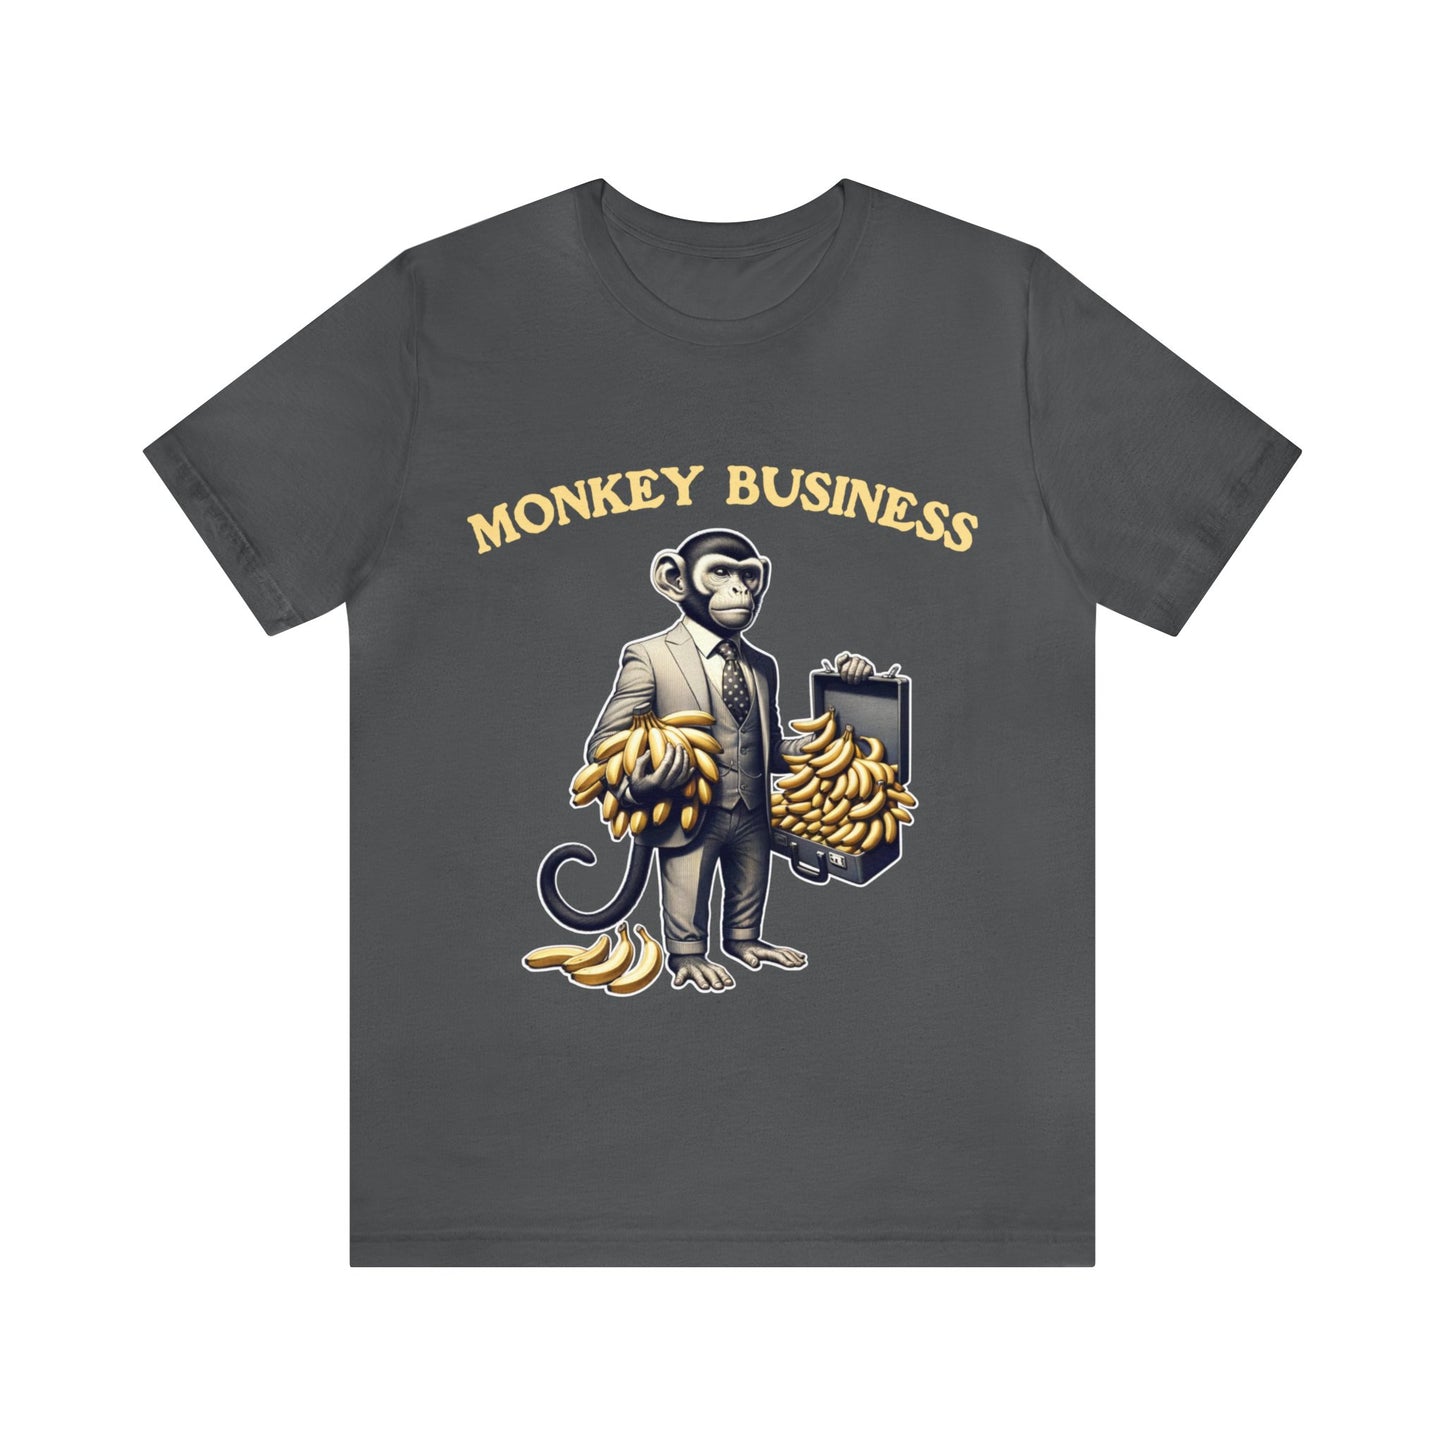 Monkey Business Shirt, Bananas, Funny Monkey, Ironic, Cute, Gift, Cool